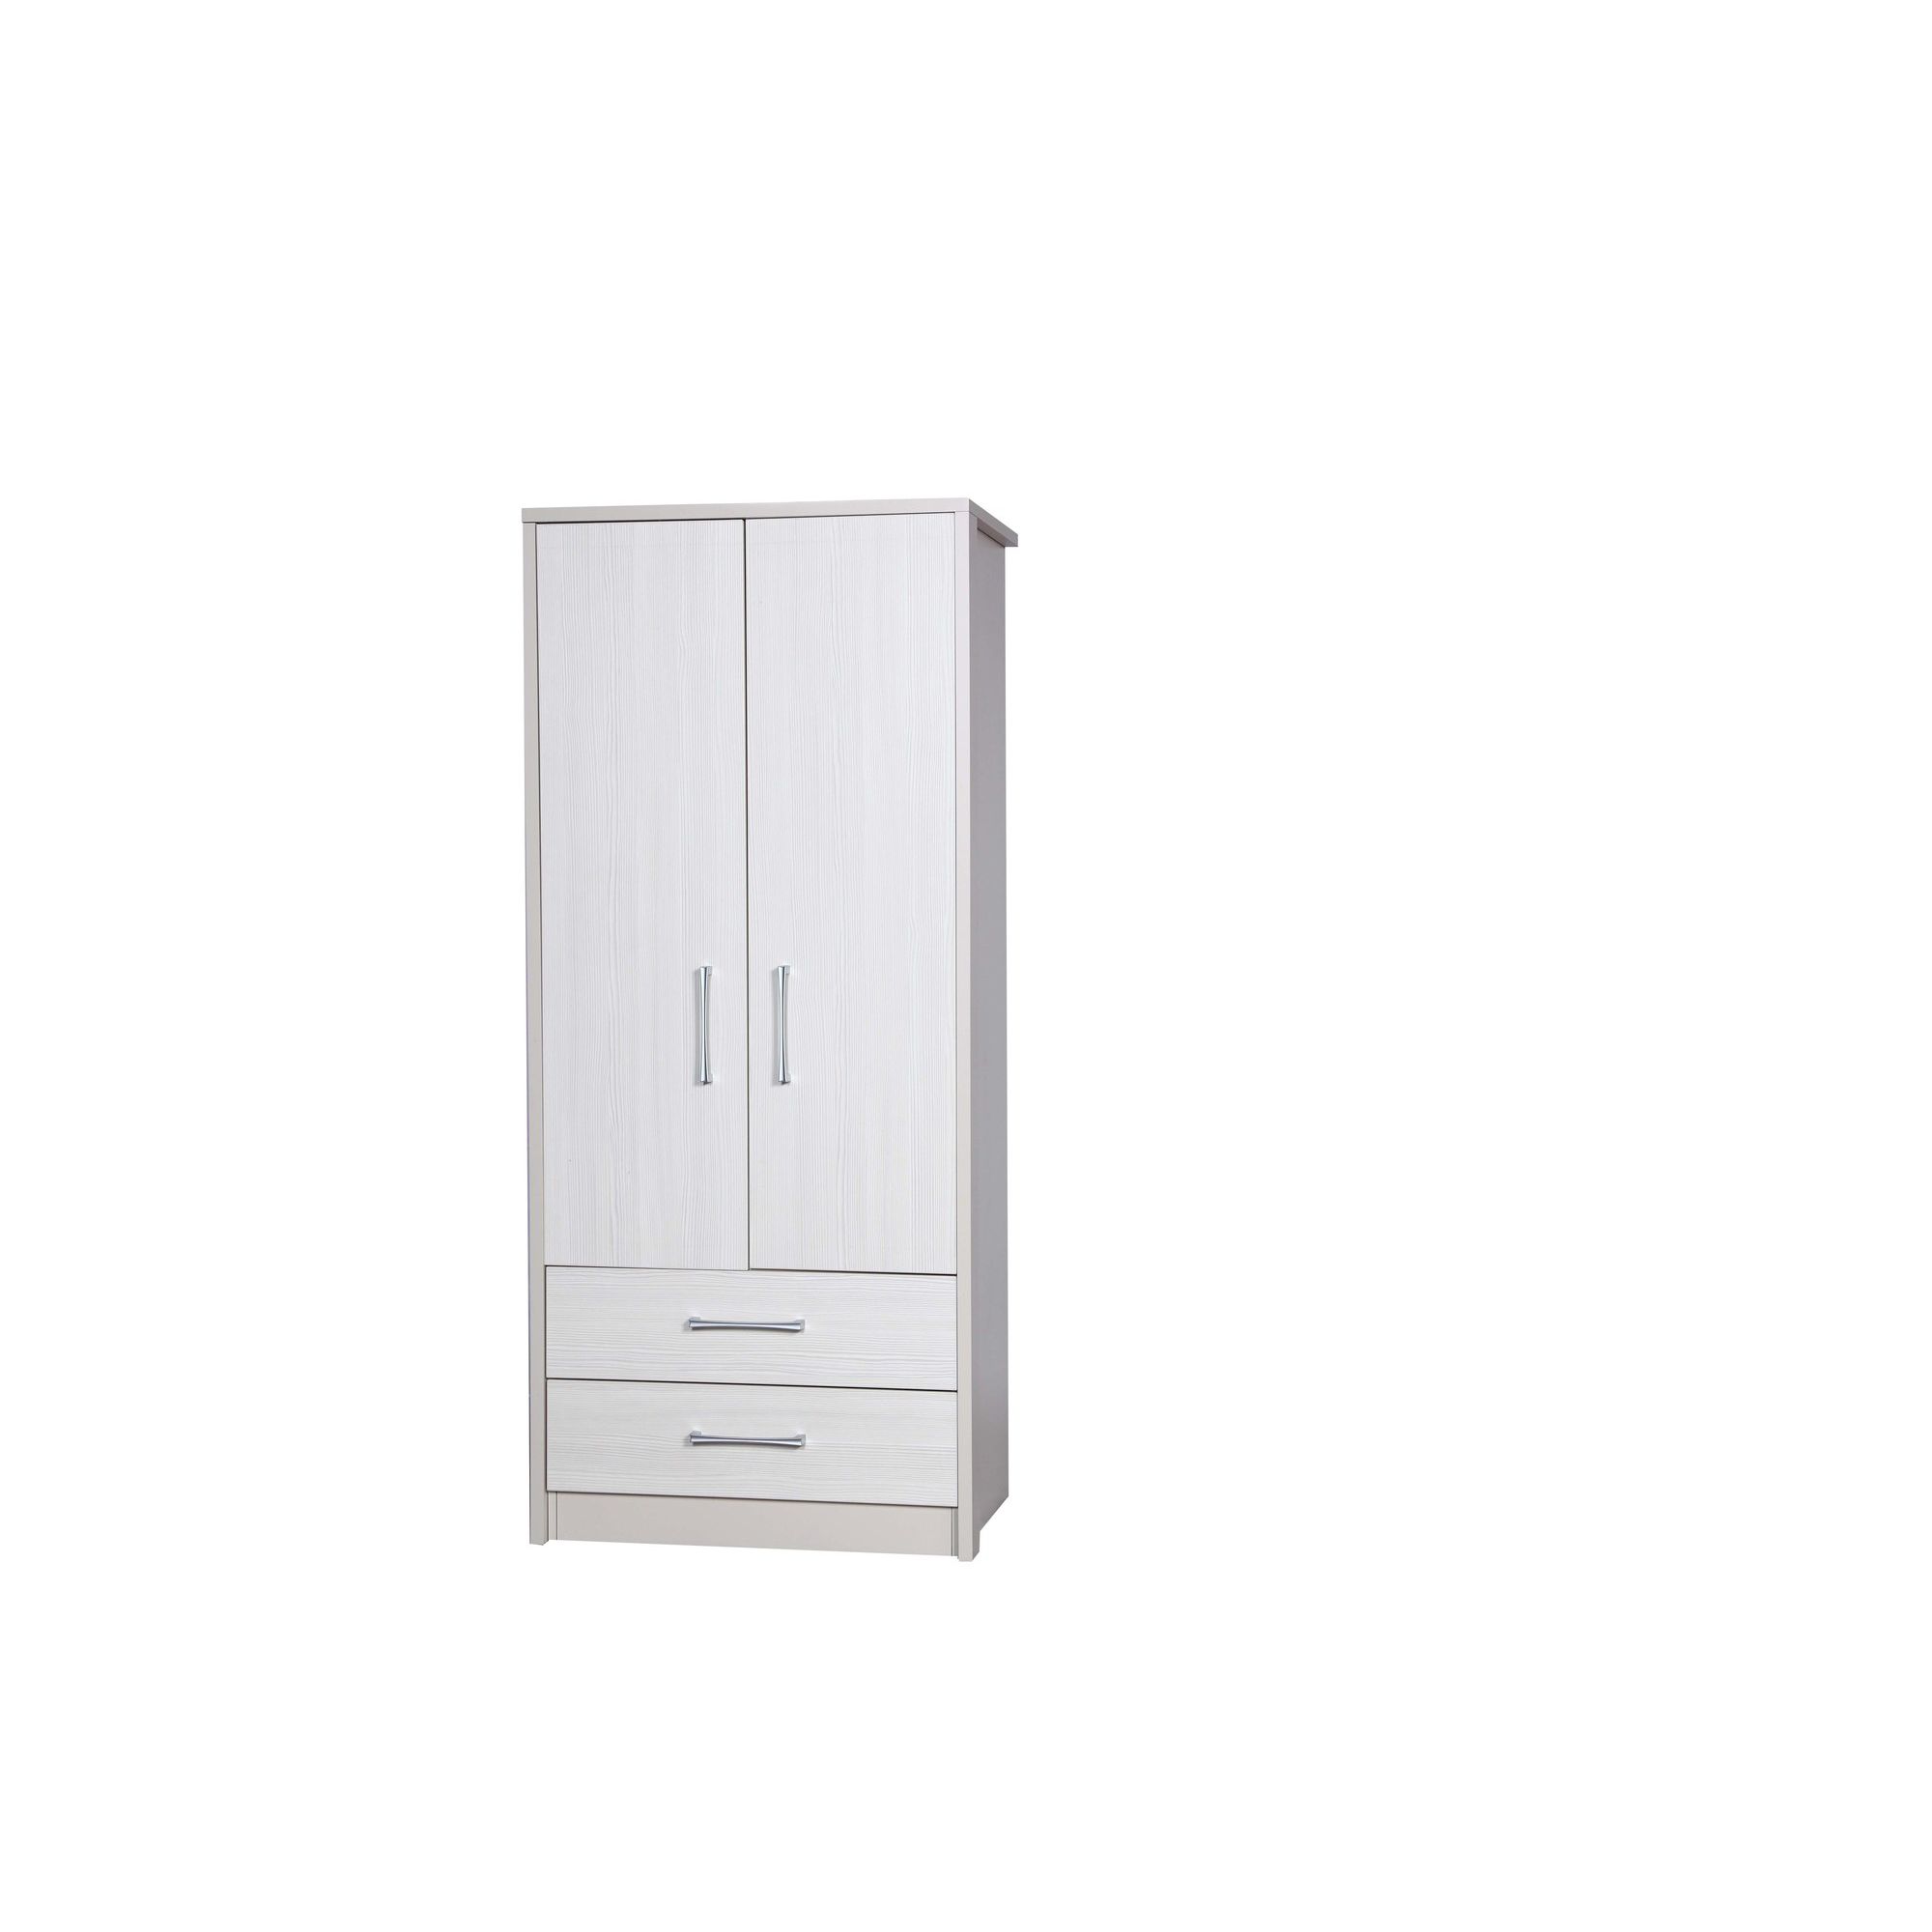 Alto Furniture Avola 2 Drawer Combi Wardrobe - Cream Carcass With White Avola at Tescos Direct